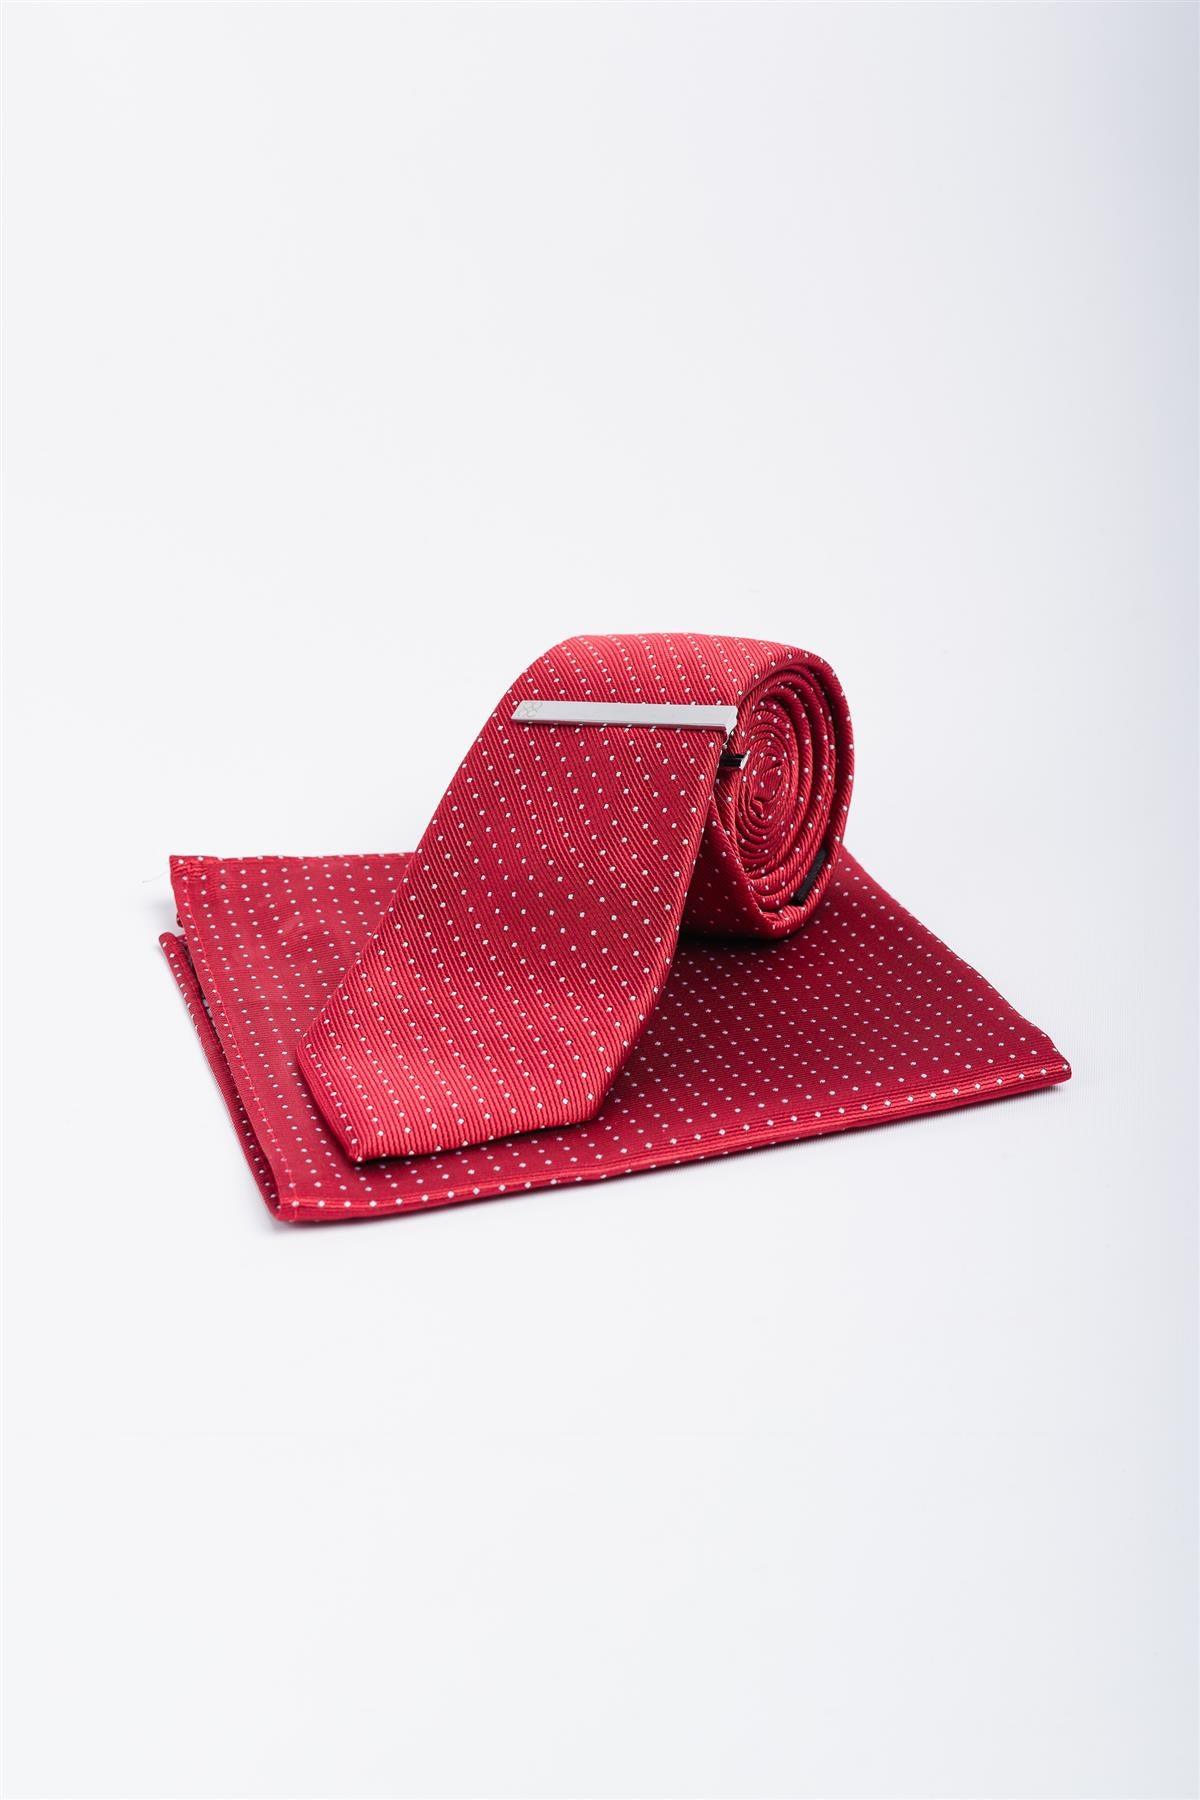 Cavani red dot tie set